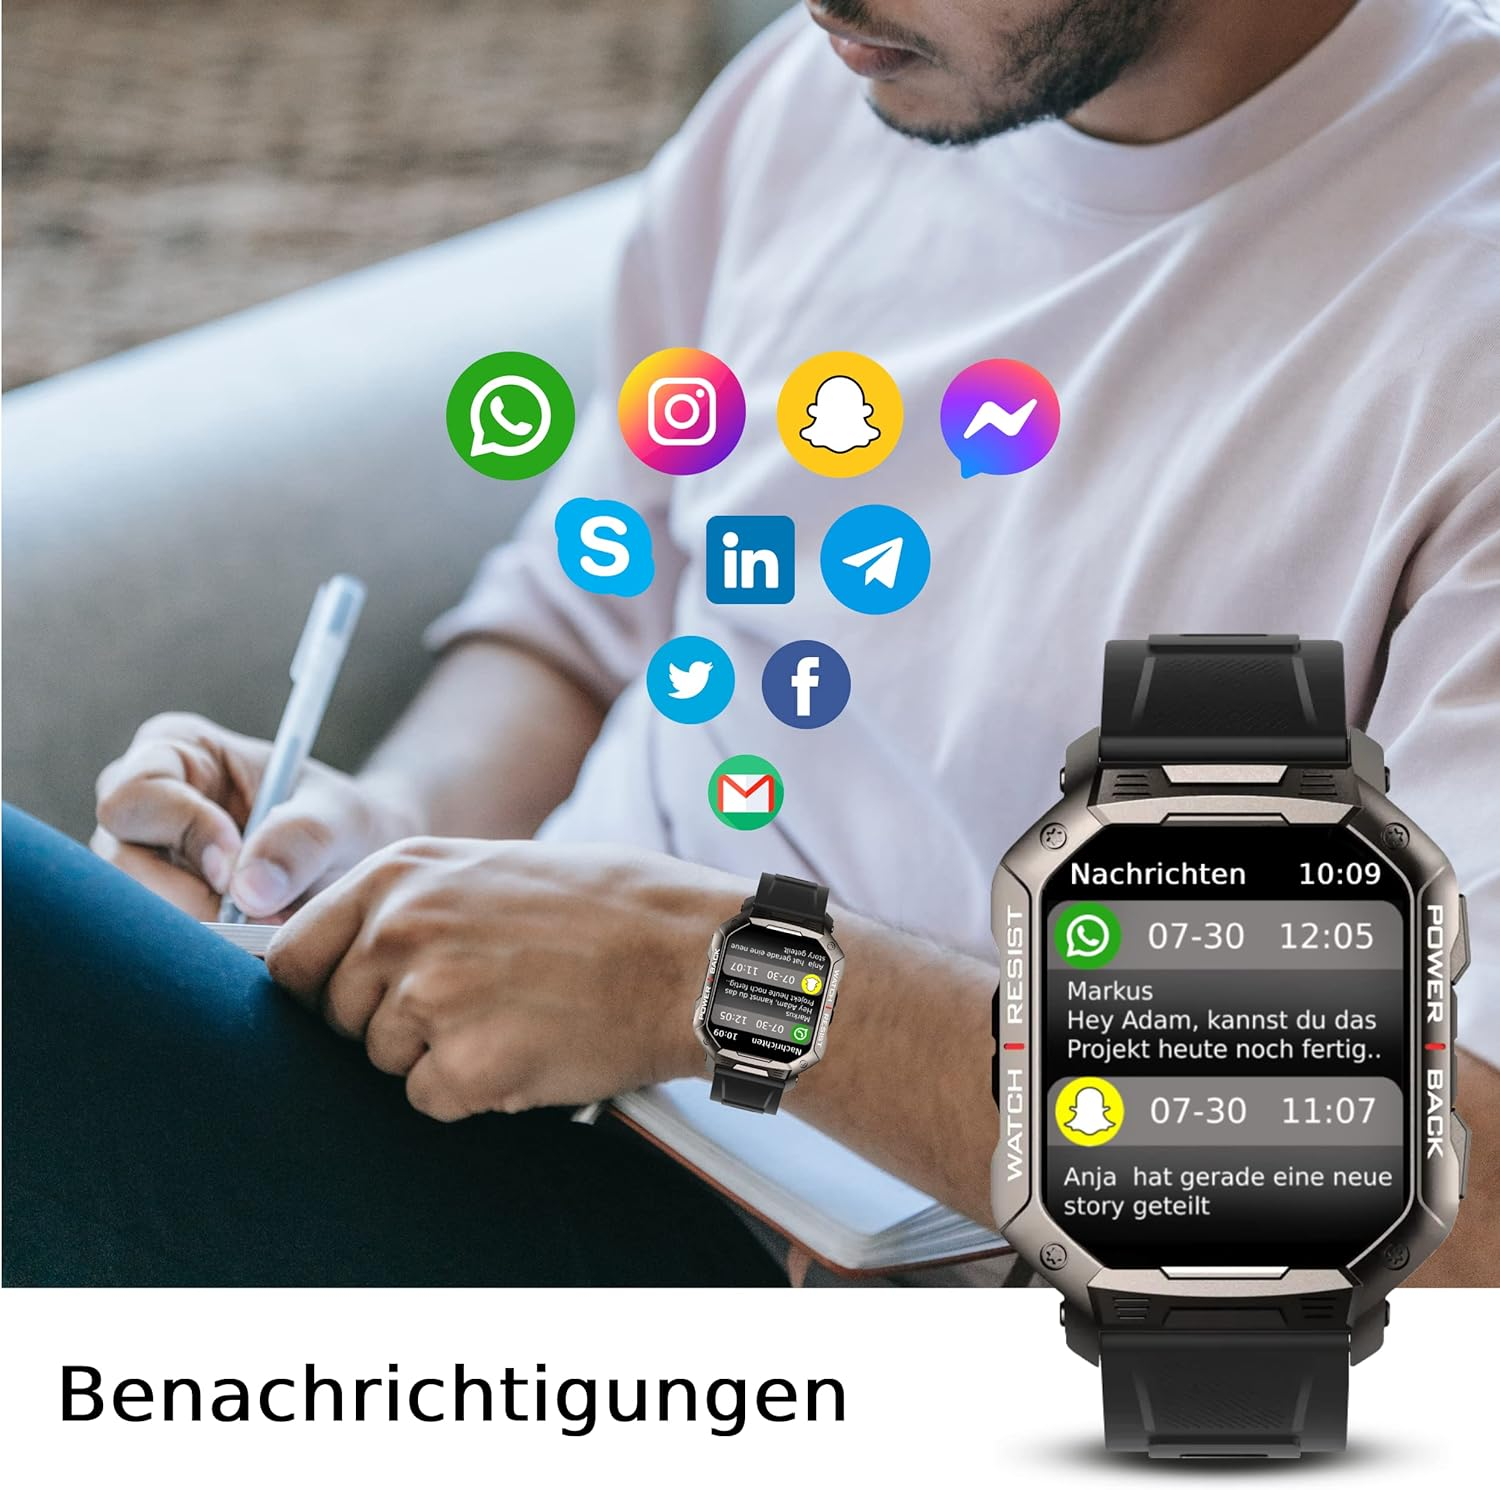 Sportuhr DINITECH Armbanduhr Smartwatch Legierung Schwarz Silikon, Armbänd 1x